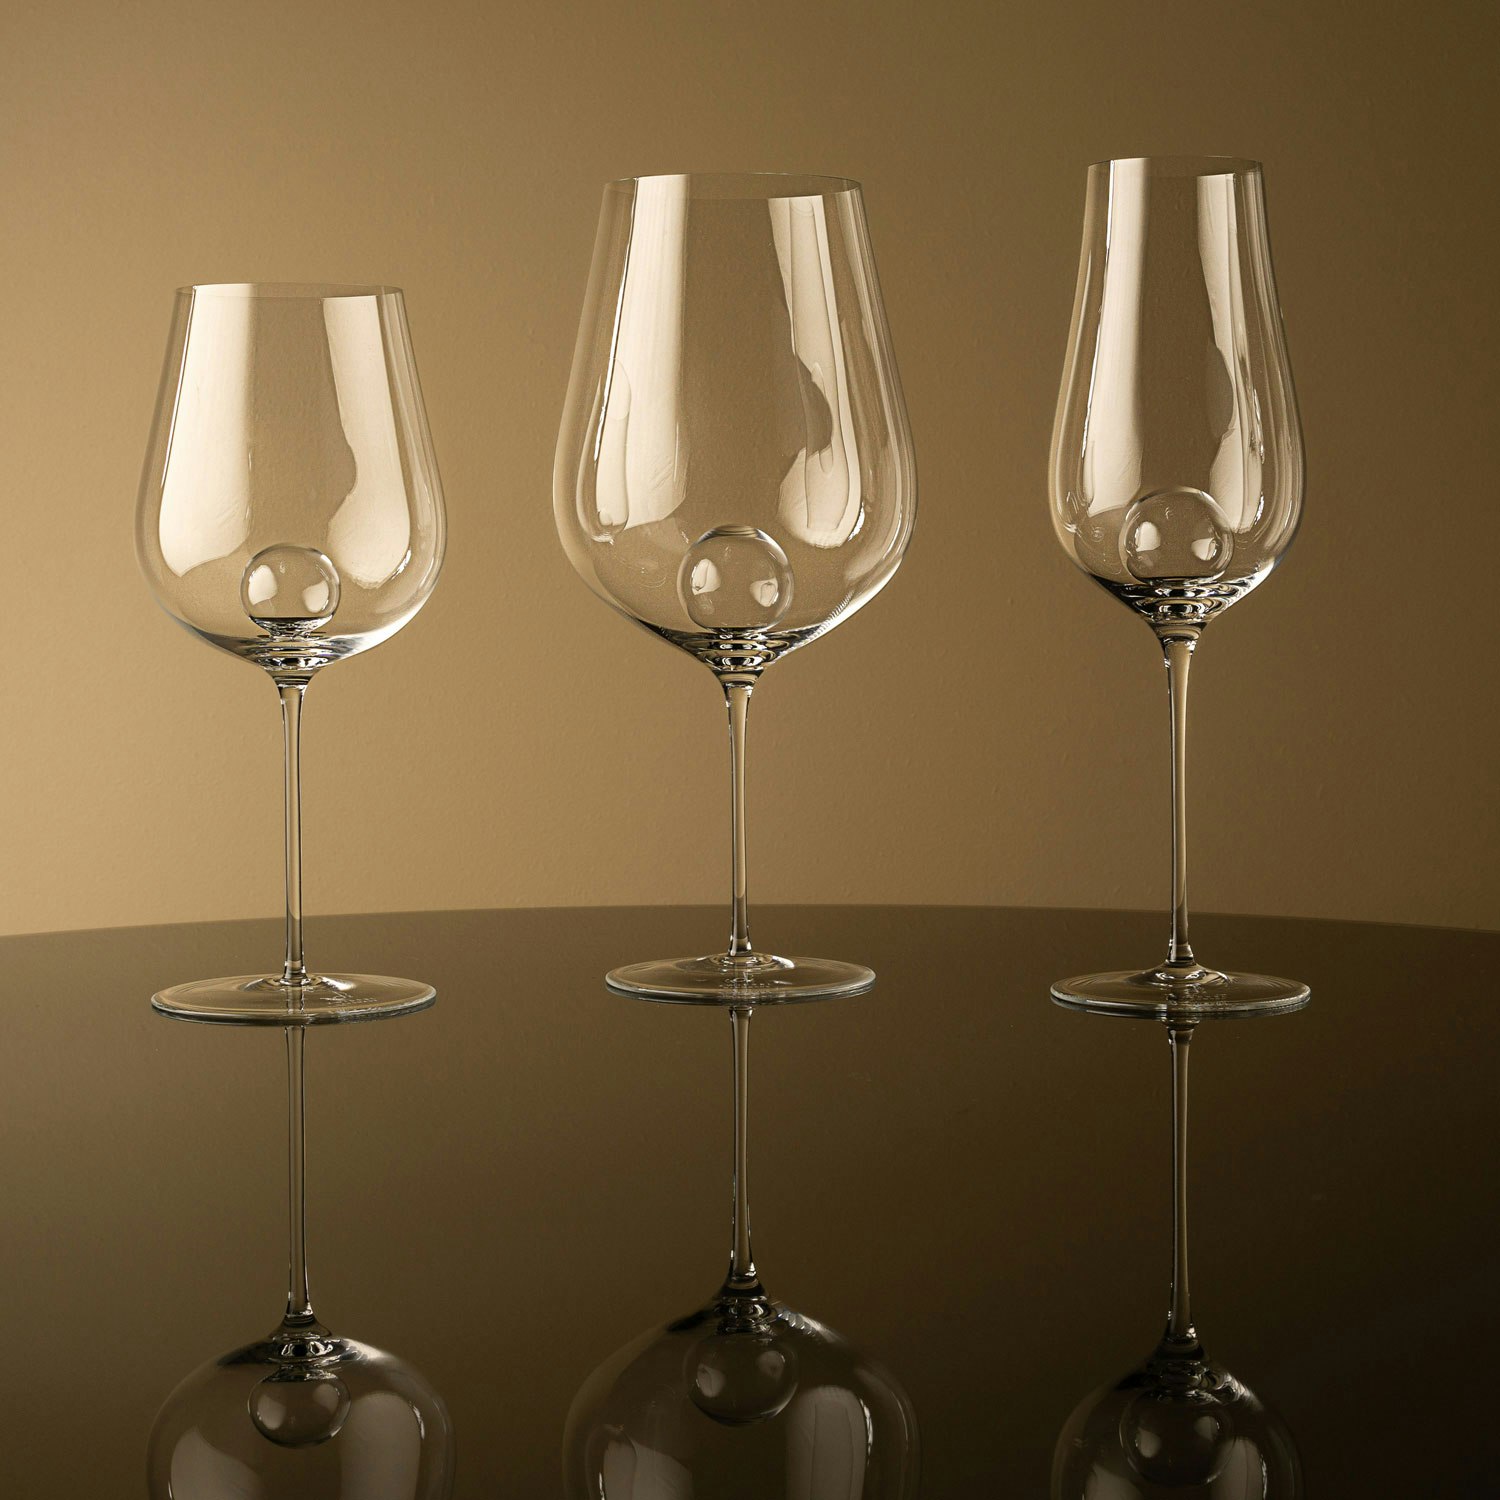 Spiegelau Willsberger White Wine Glasses (set of 4) – Vintage 38